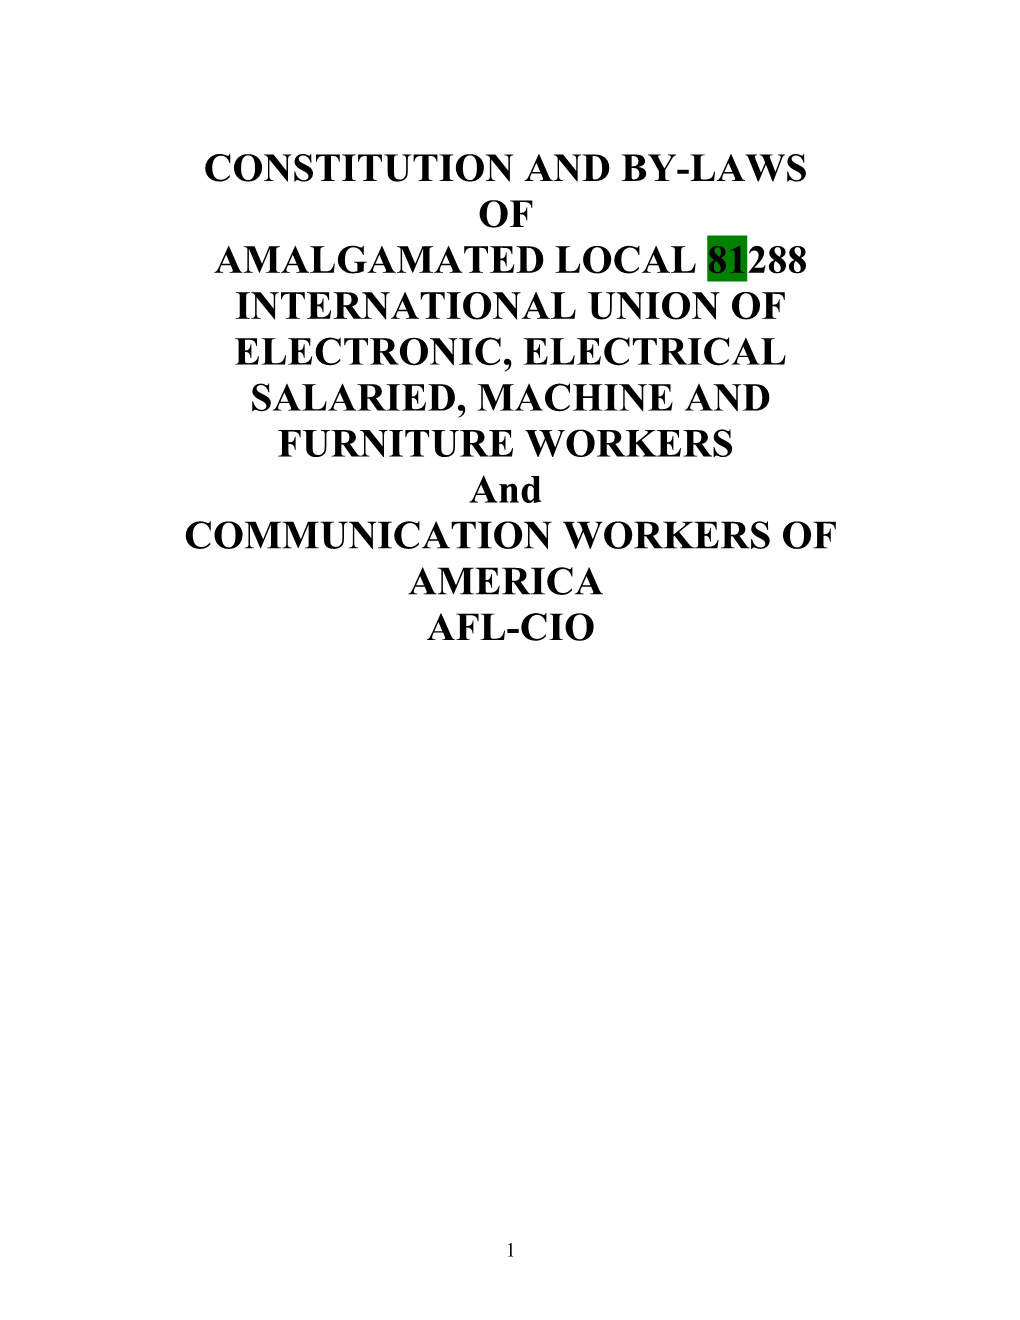 International Union of Electronic, Electrical